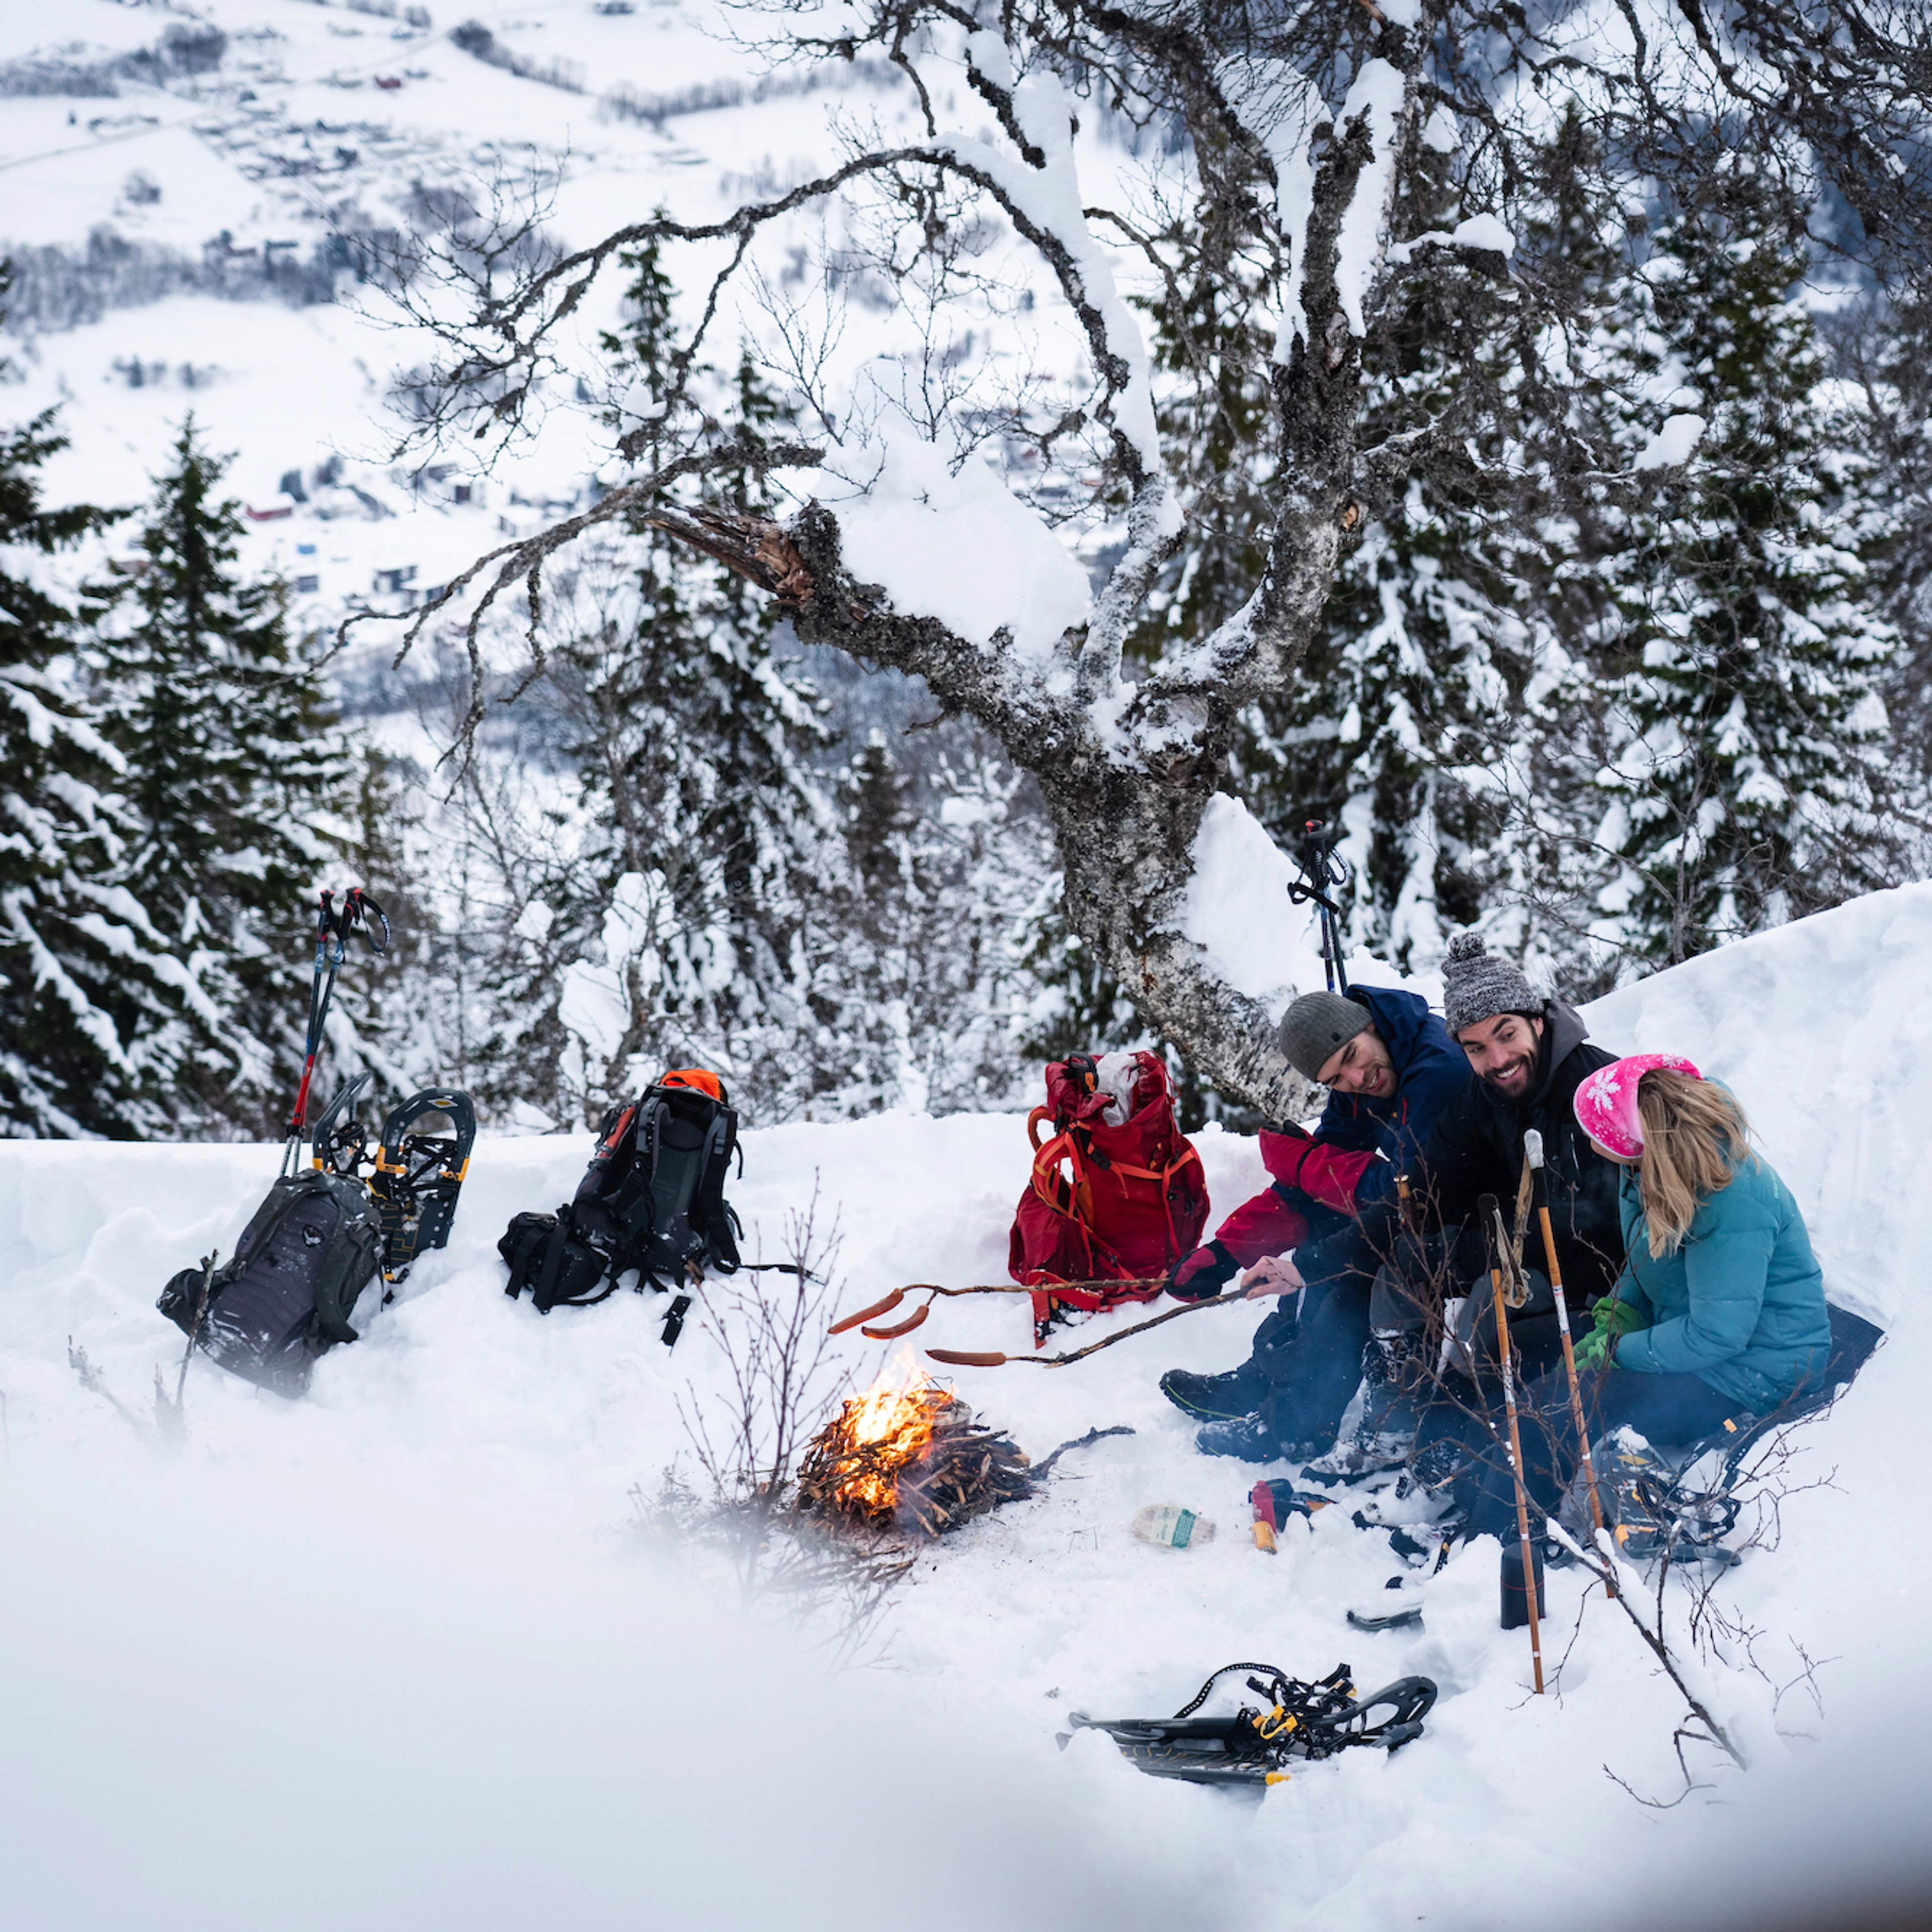 History telling around the bonfire - Snowhoe hike to Hanguren, Voss, Norway